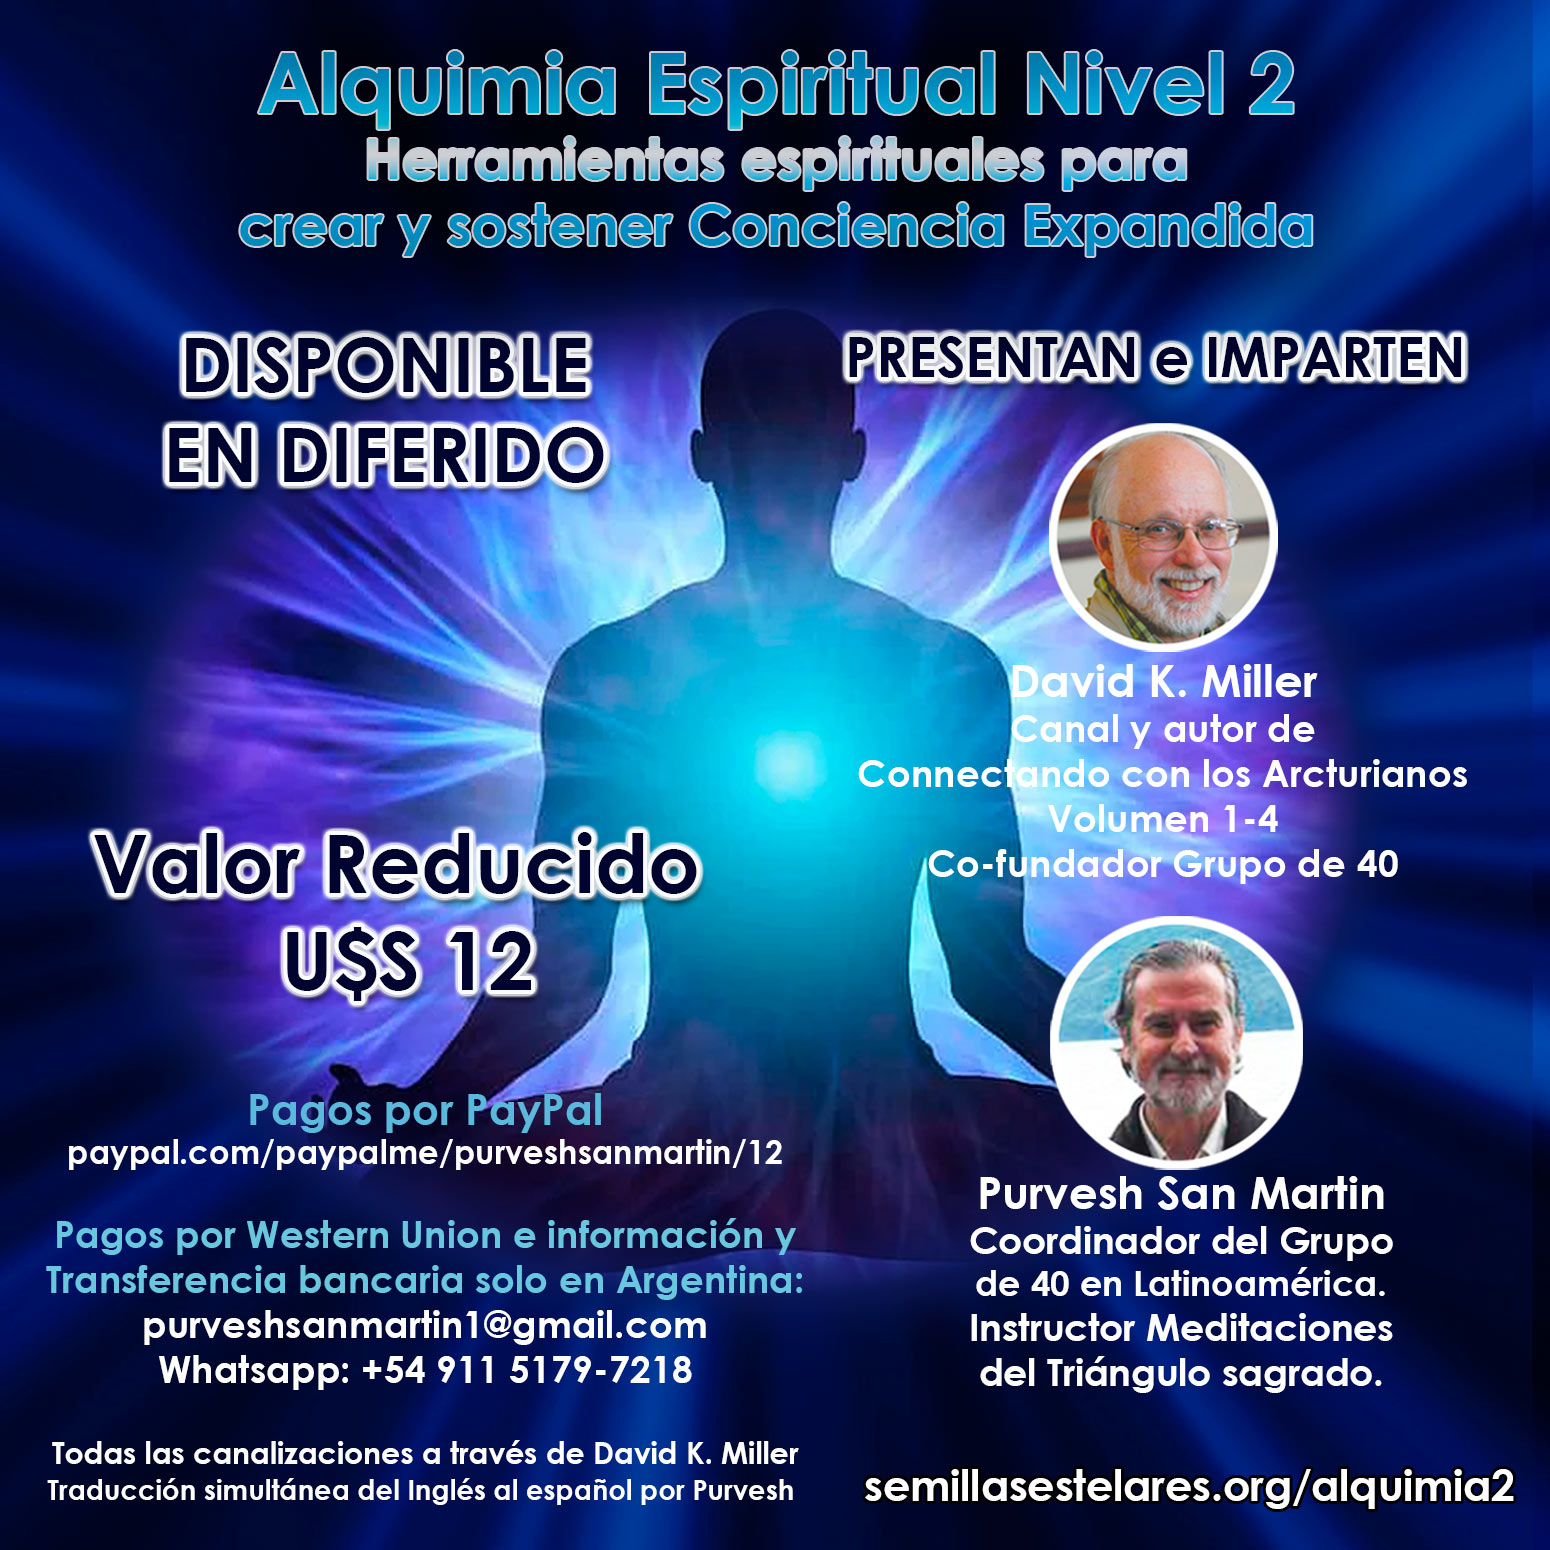 Alquimia Espiritual Nivel 2 con David Miller y Purvesh San Martín